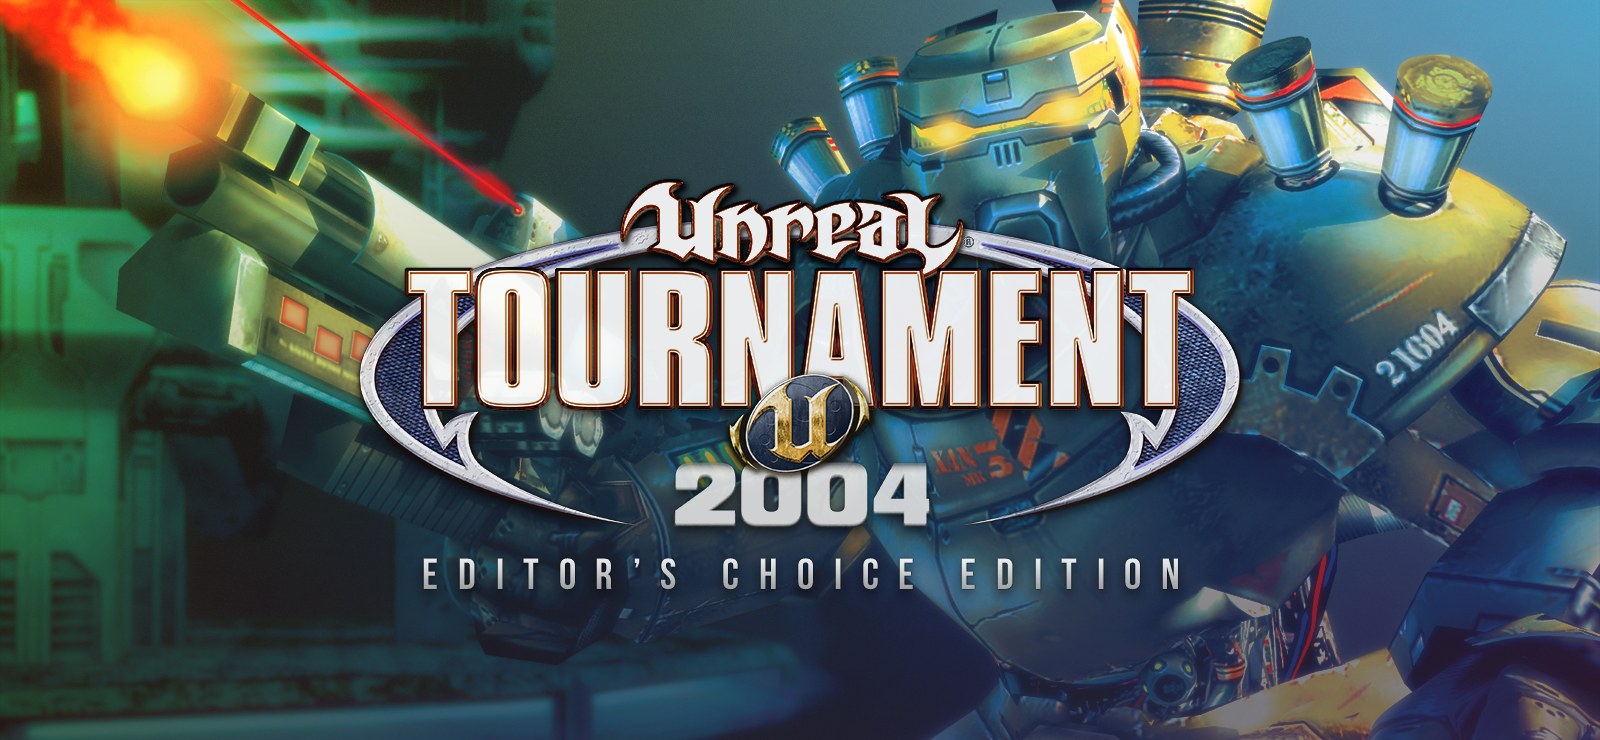 Unreal Tournament 2004 Editor's Choice Edition